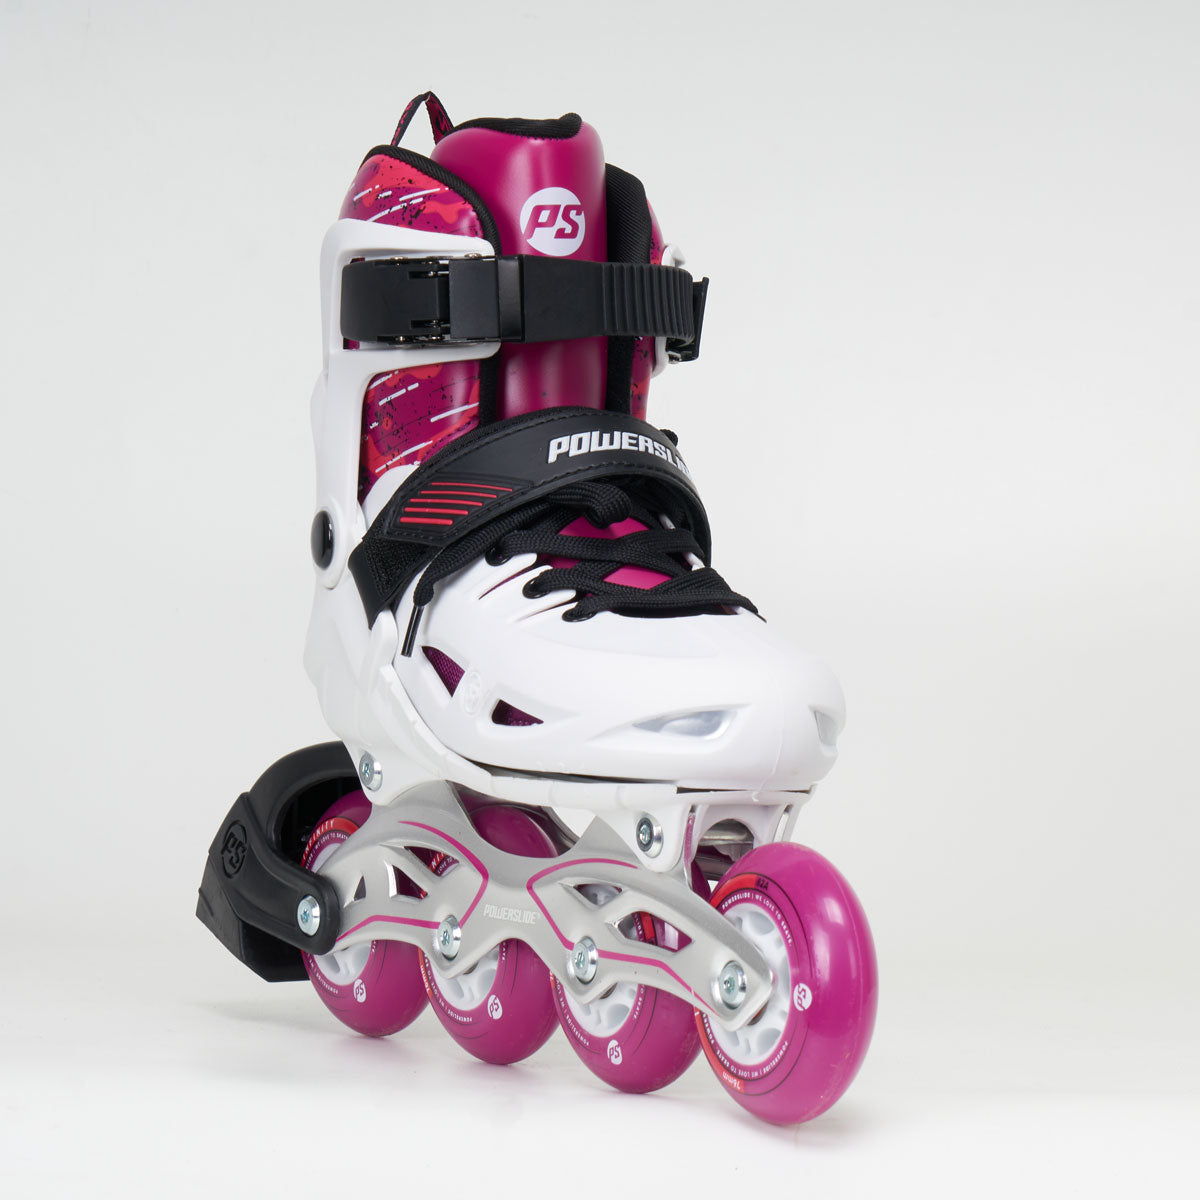 Powerslide Phuzion Universe Size Adjustable Junior Inline Skates - Pink/White